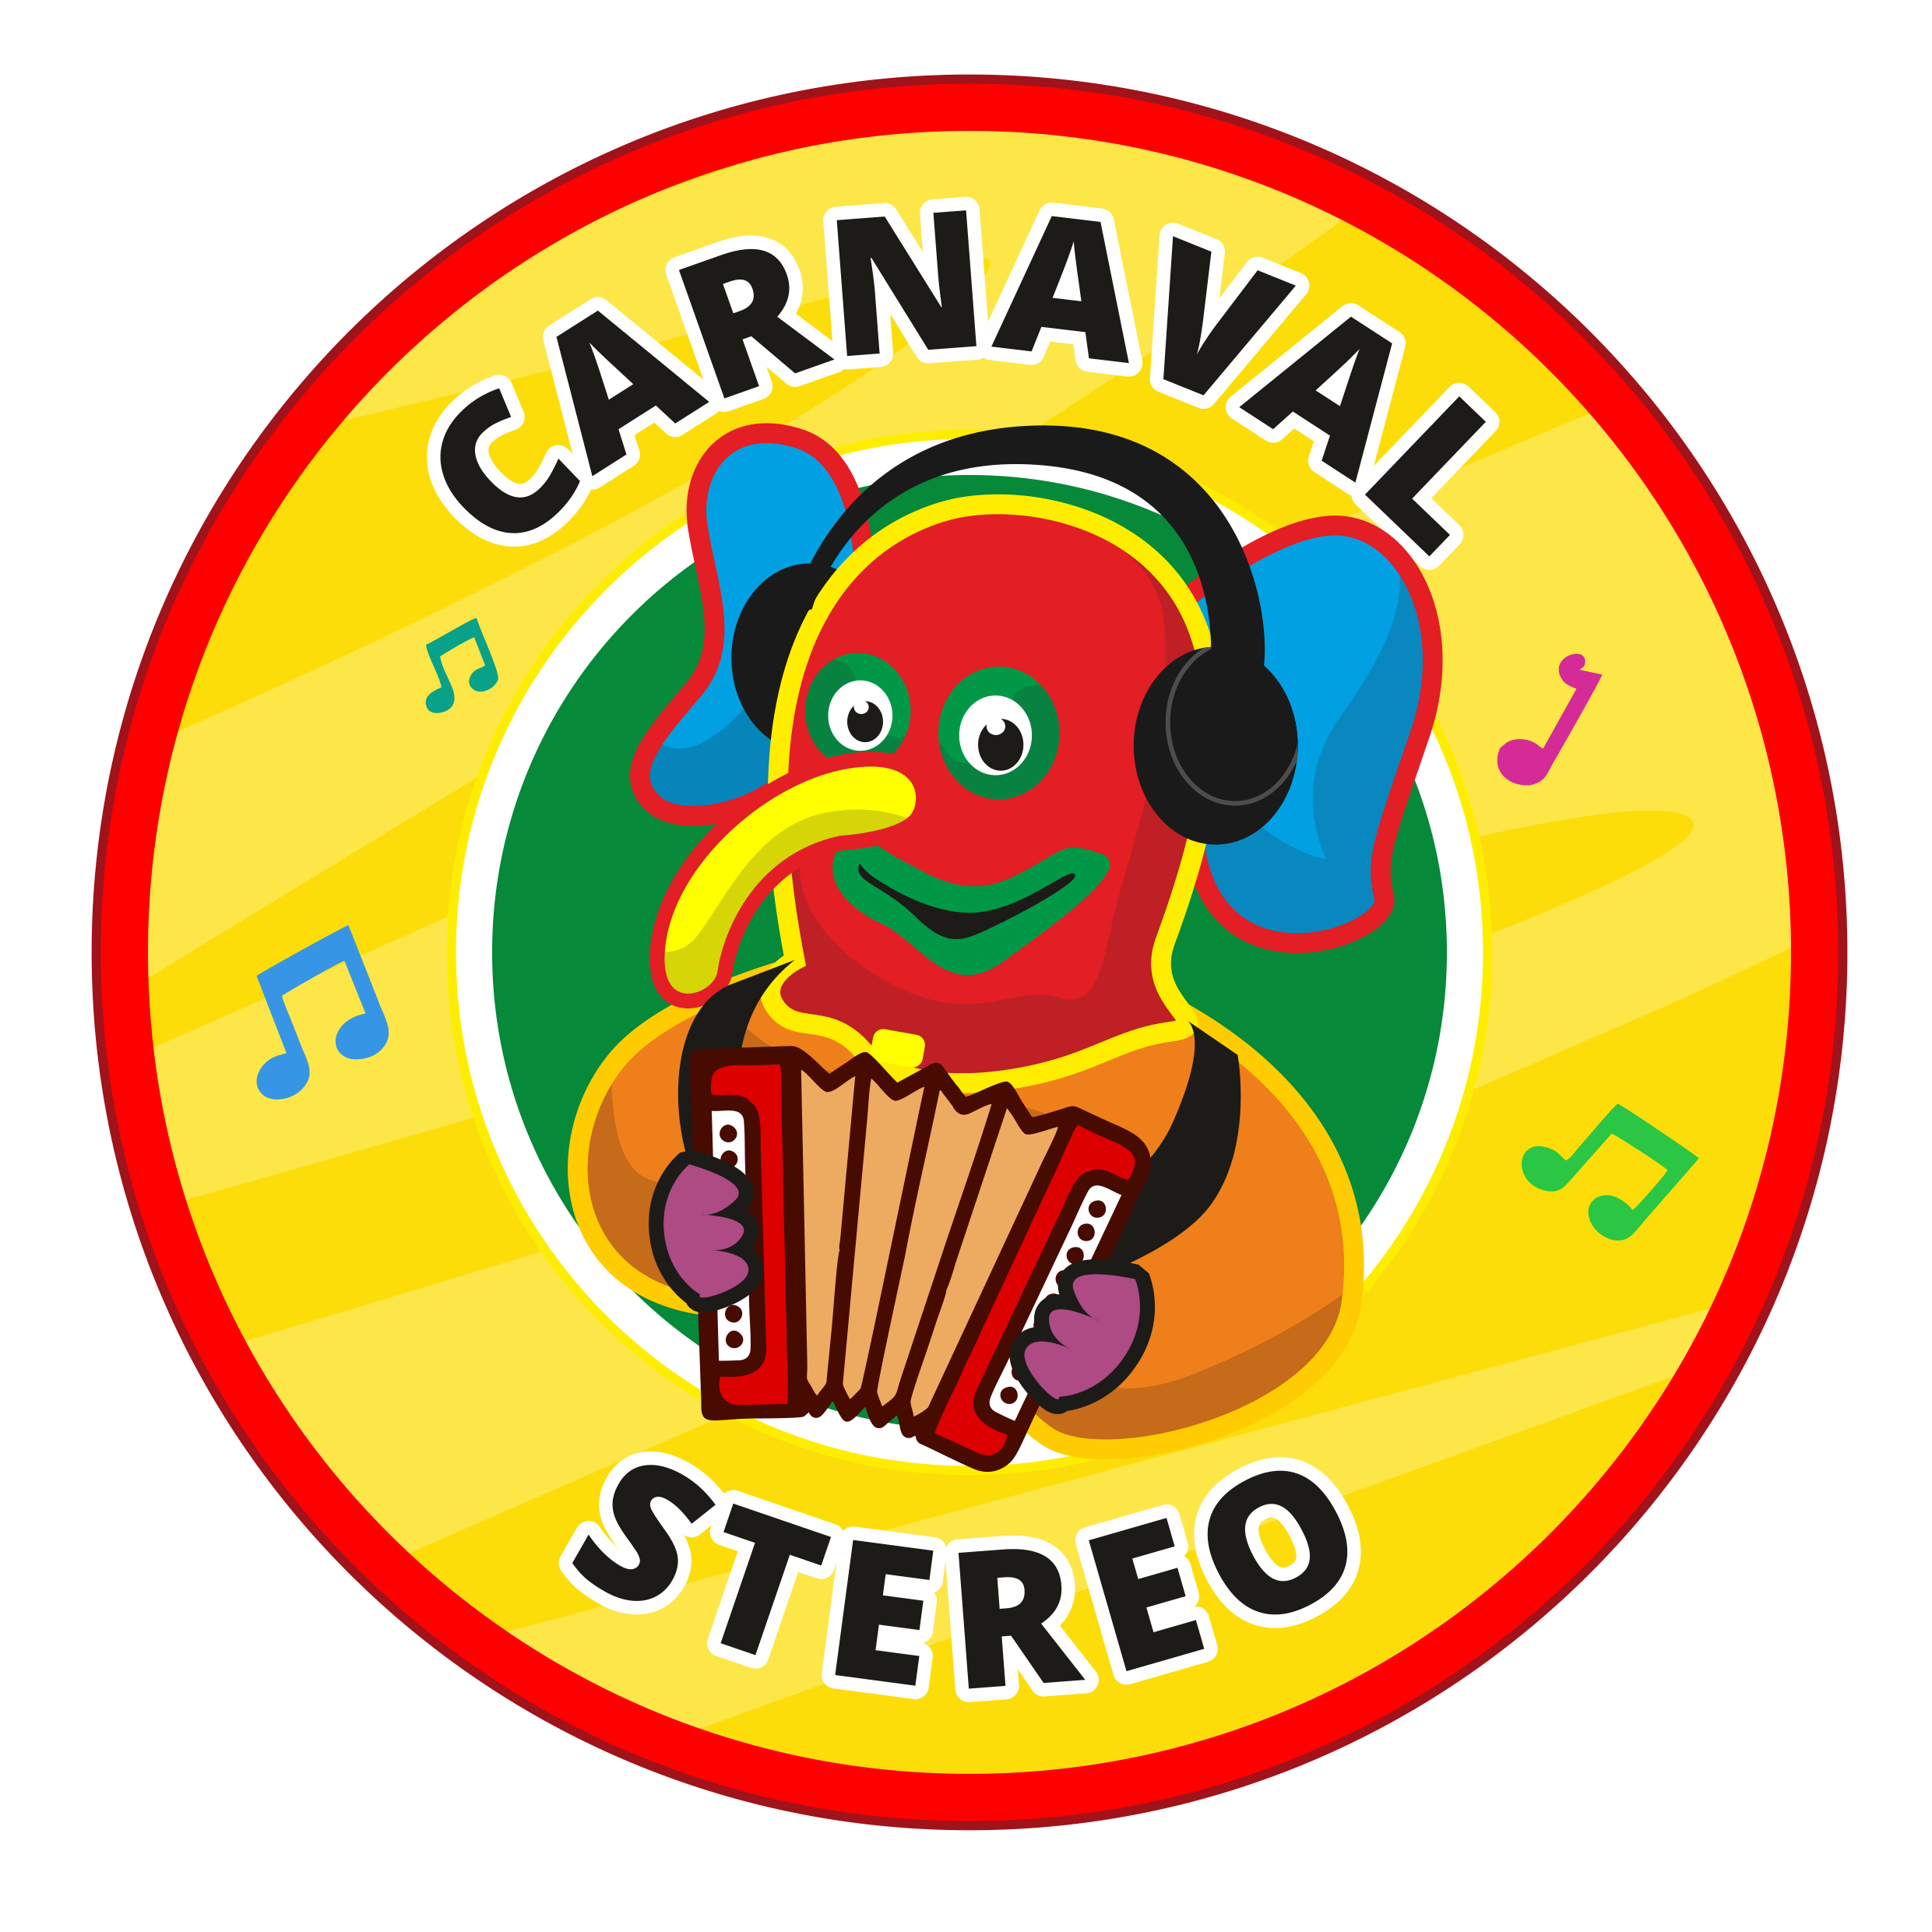 Carnaval Stereo